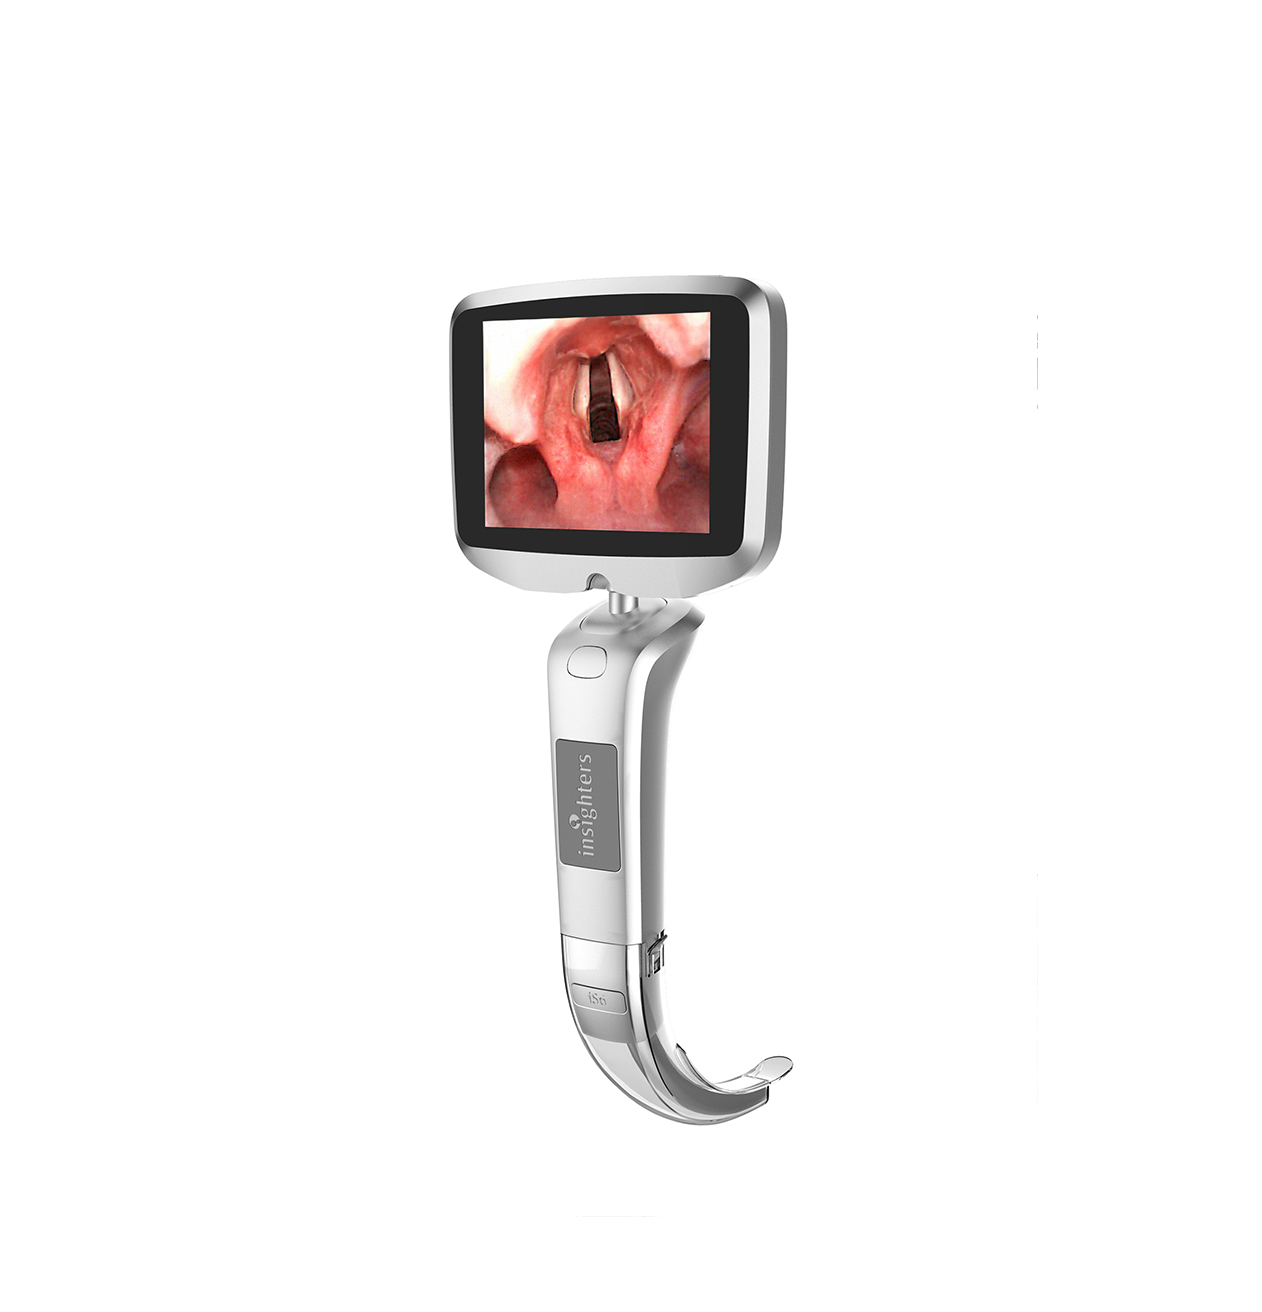 insighters-video-laringoskop-hd-kaliteli-ggs